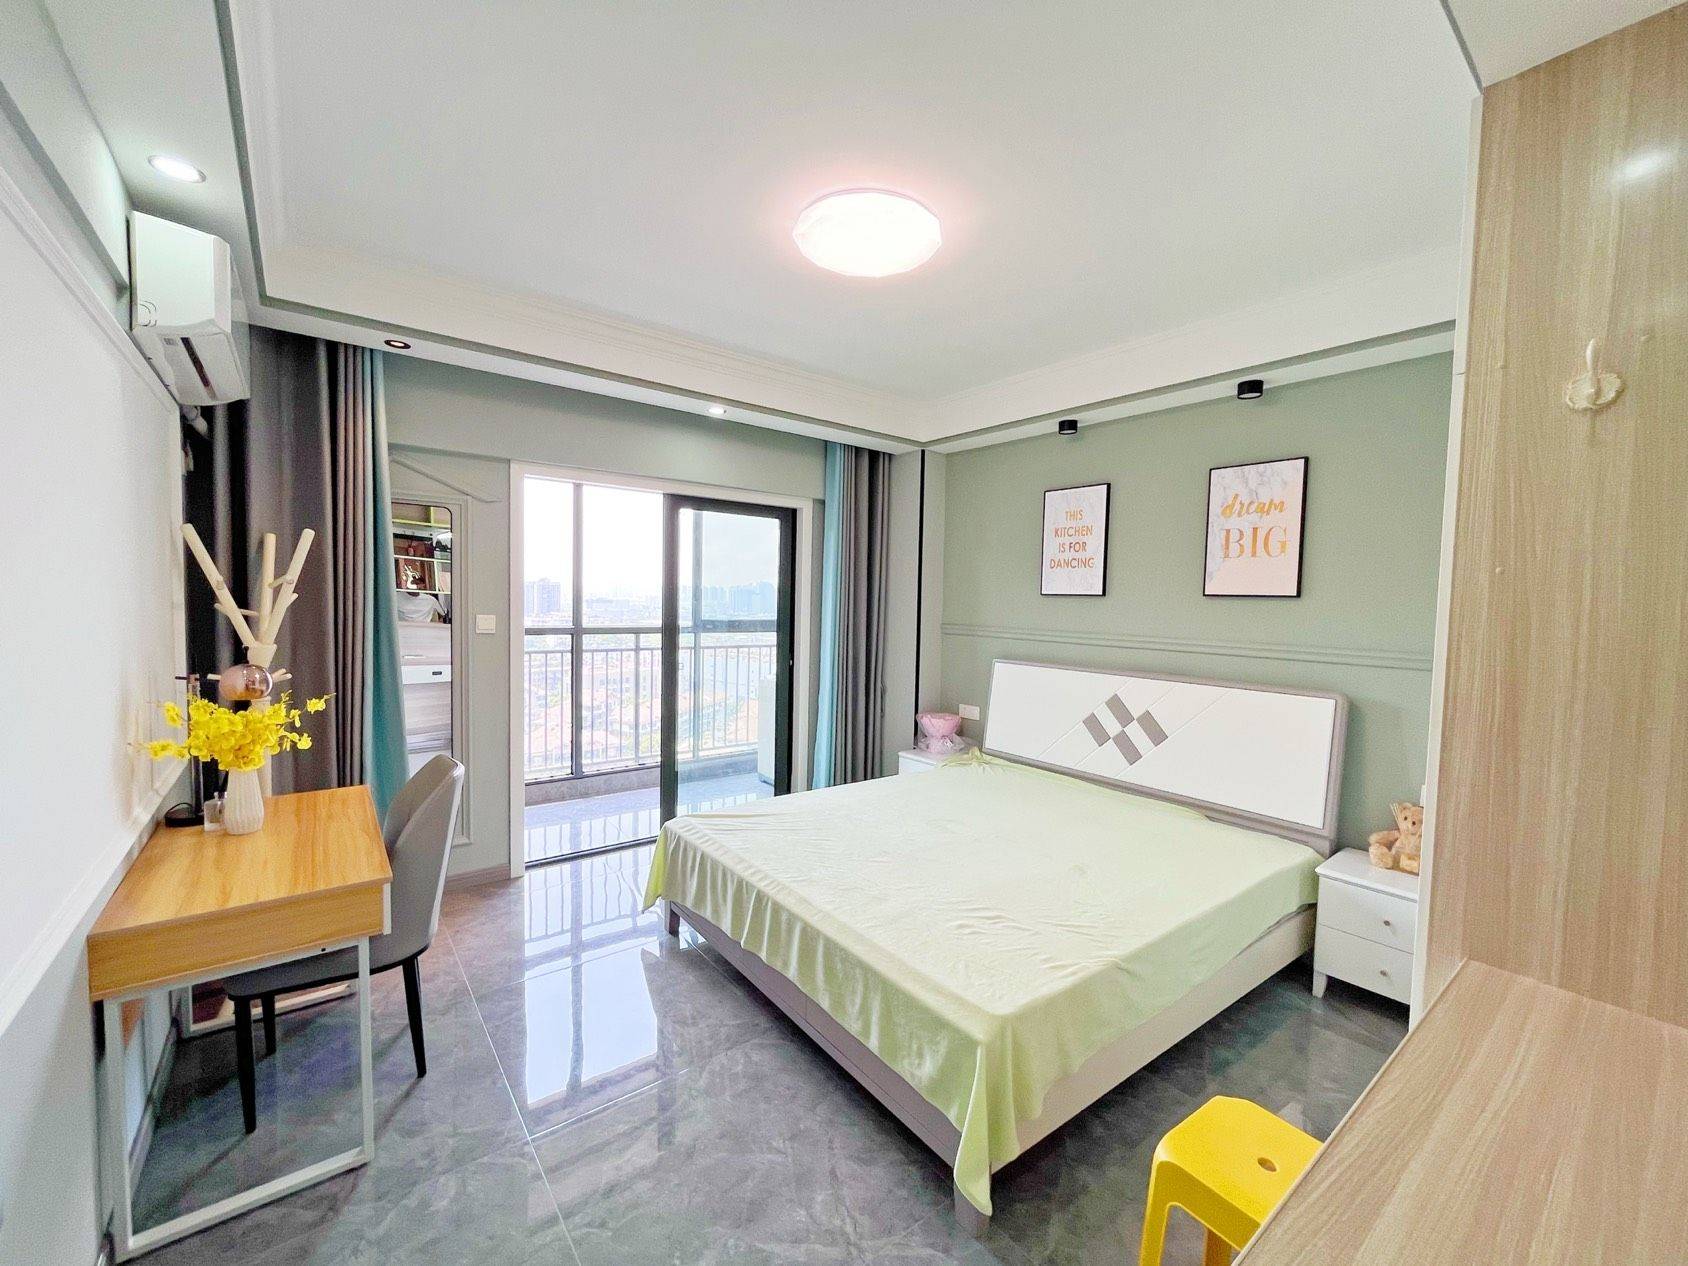 Wuhan-Hongshan-Cozy Home,Clean&Comfy,No Gender Limit,Hustle & Bustle